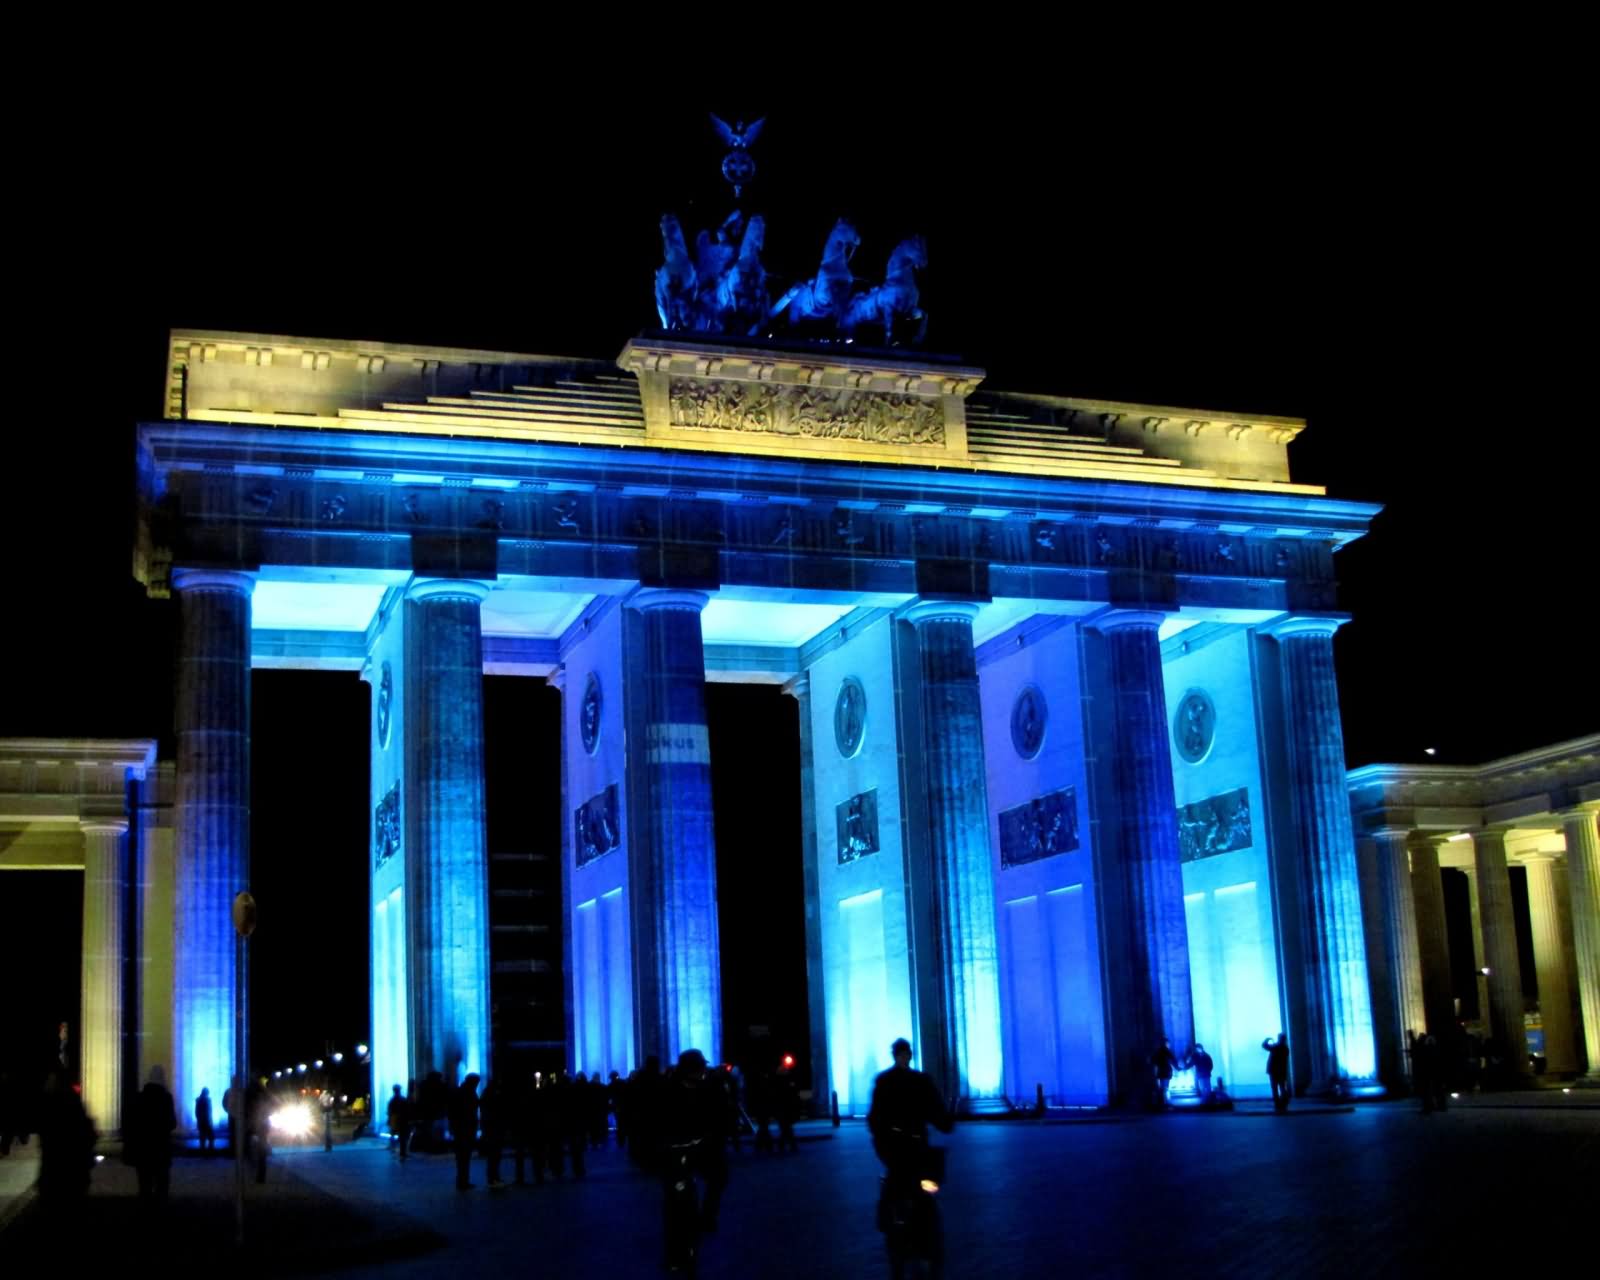 Incredible Night View Image Of The Brandenburg Gate In Berlin, Germany